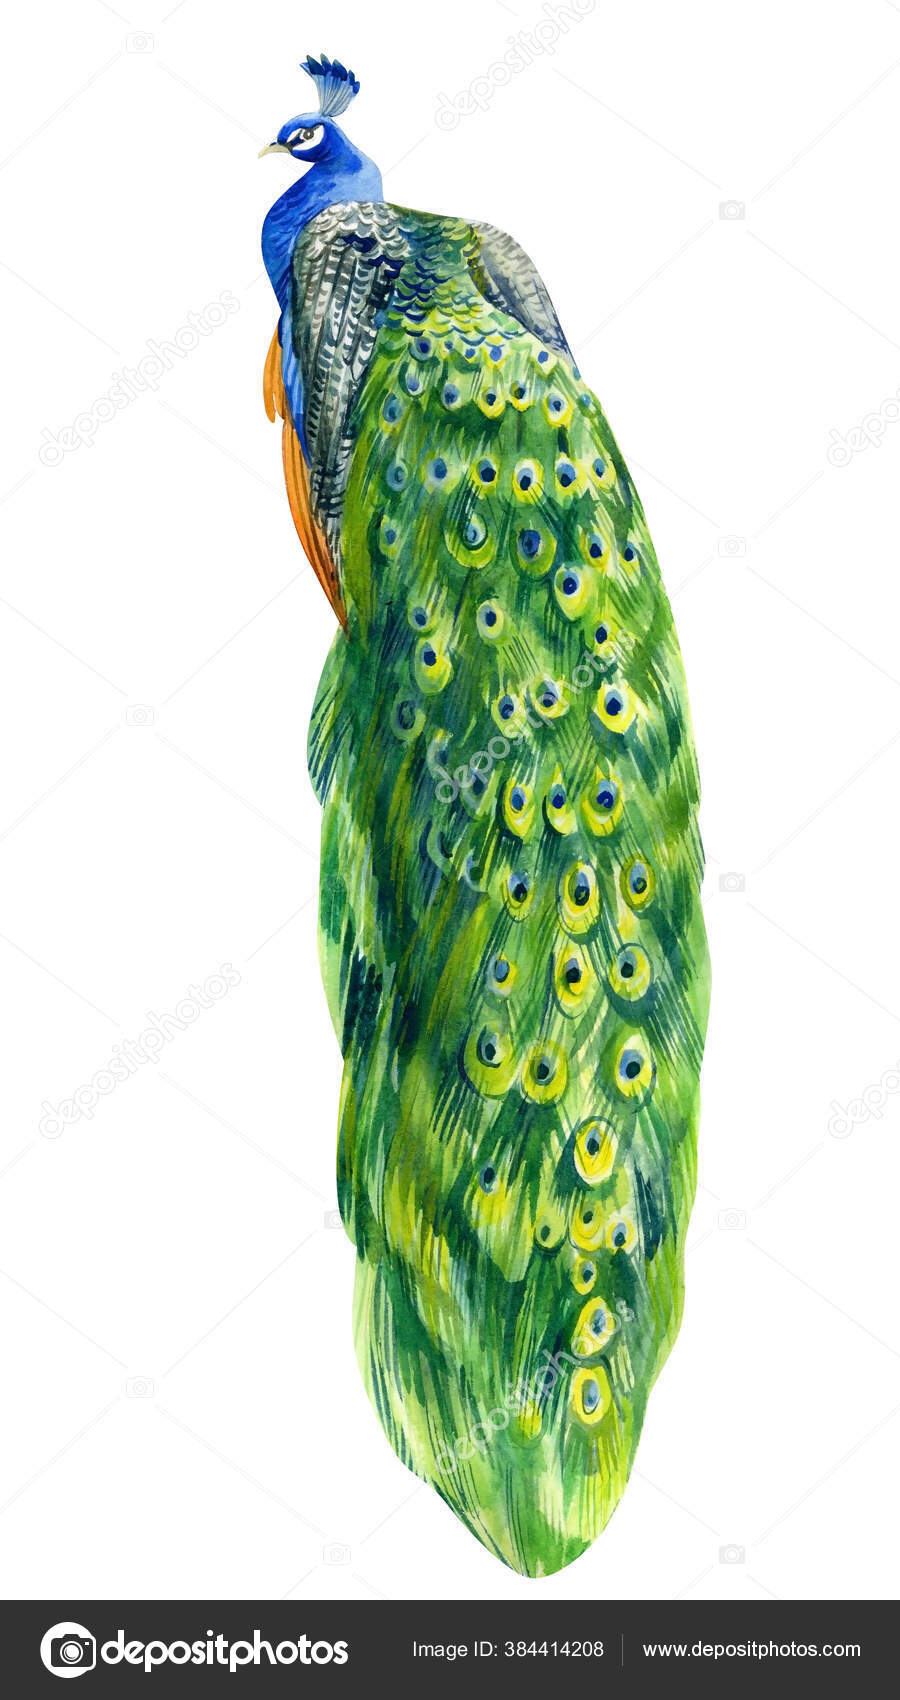 Pretty Peacock by Rebecca Wang